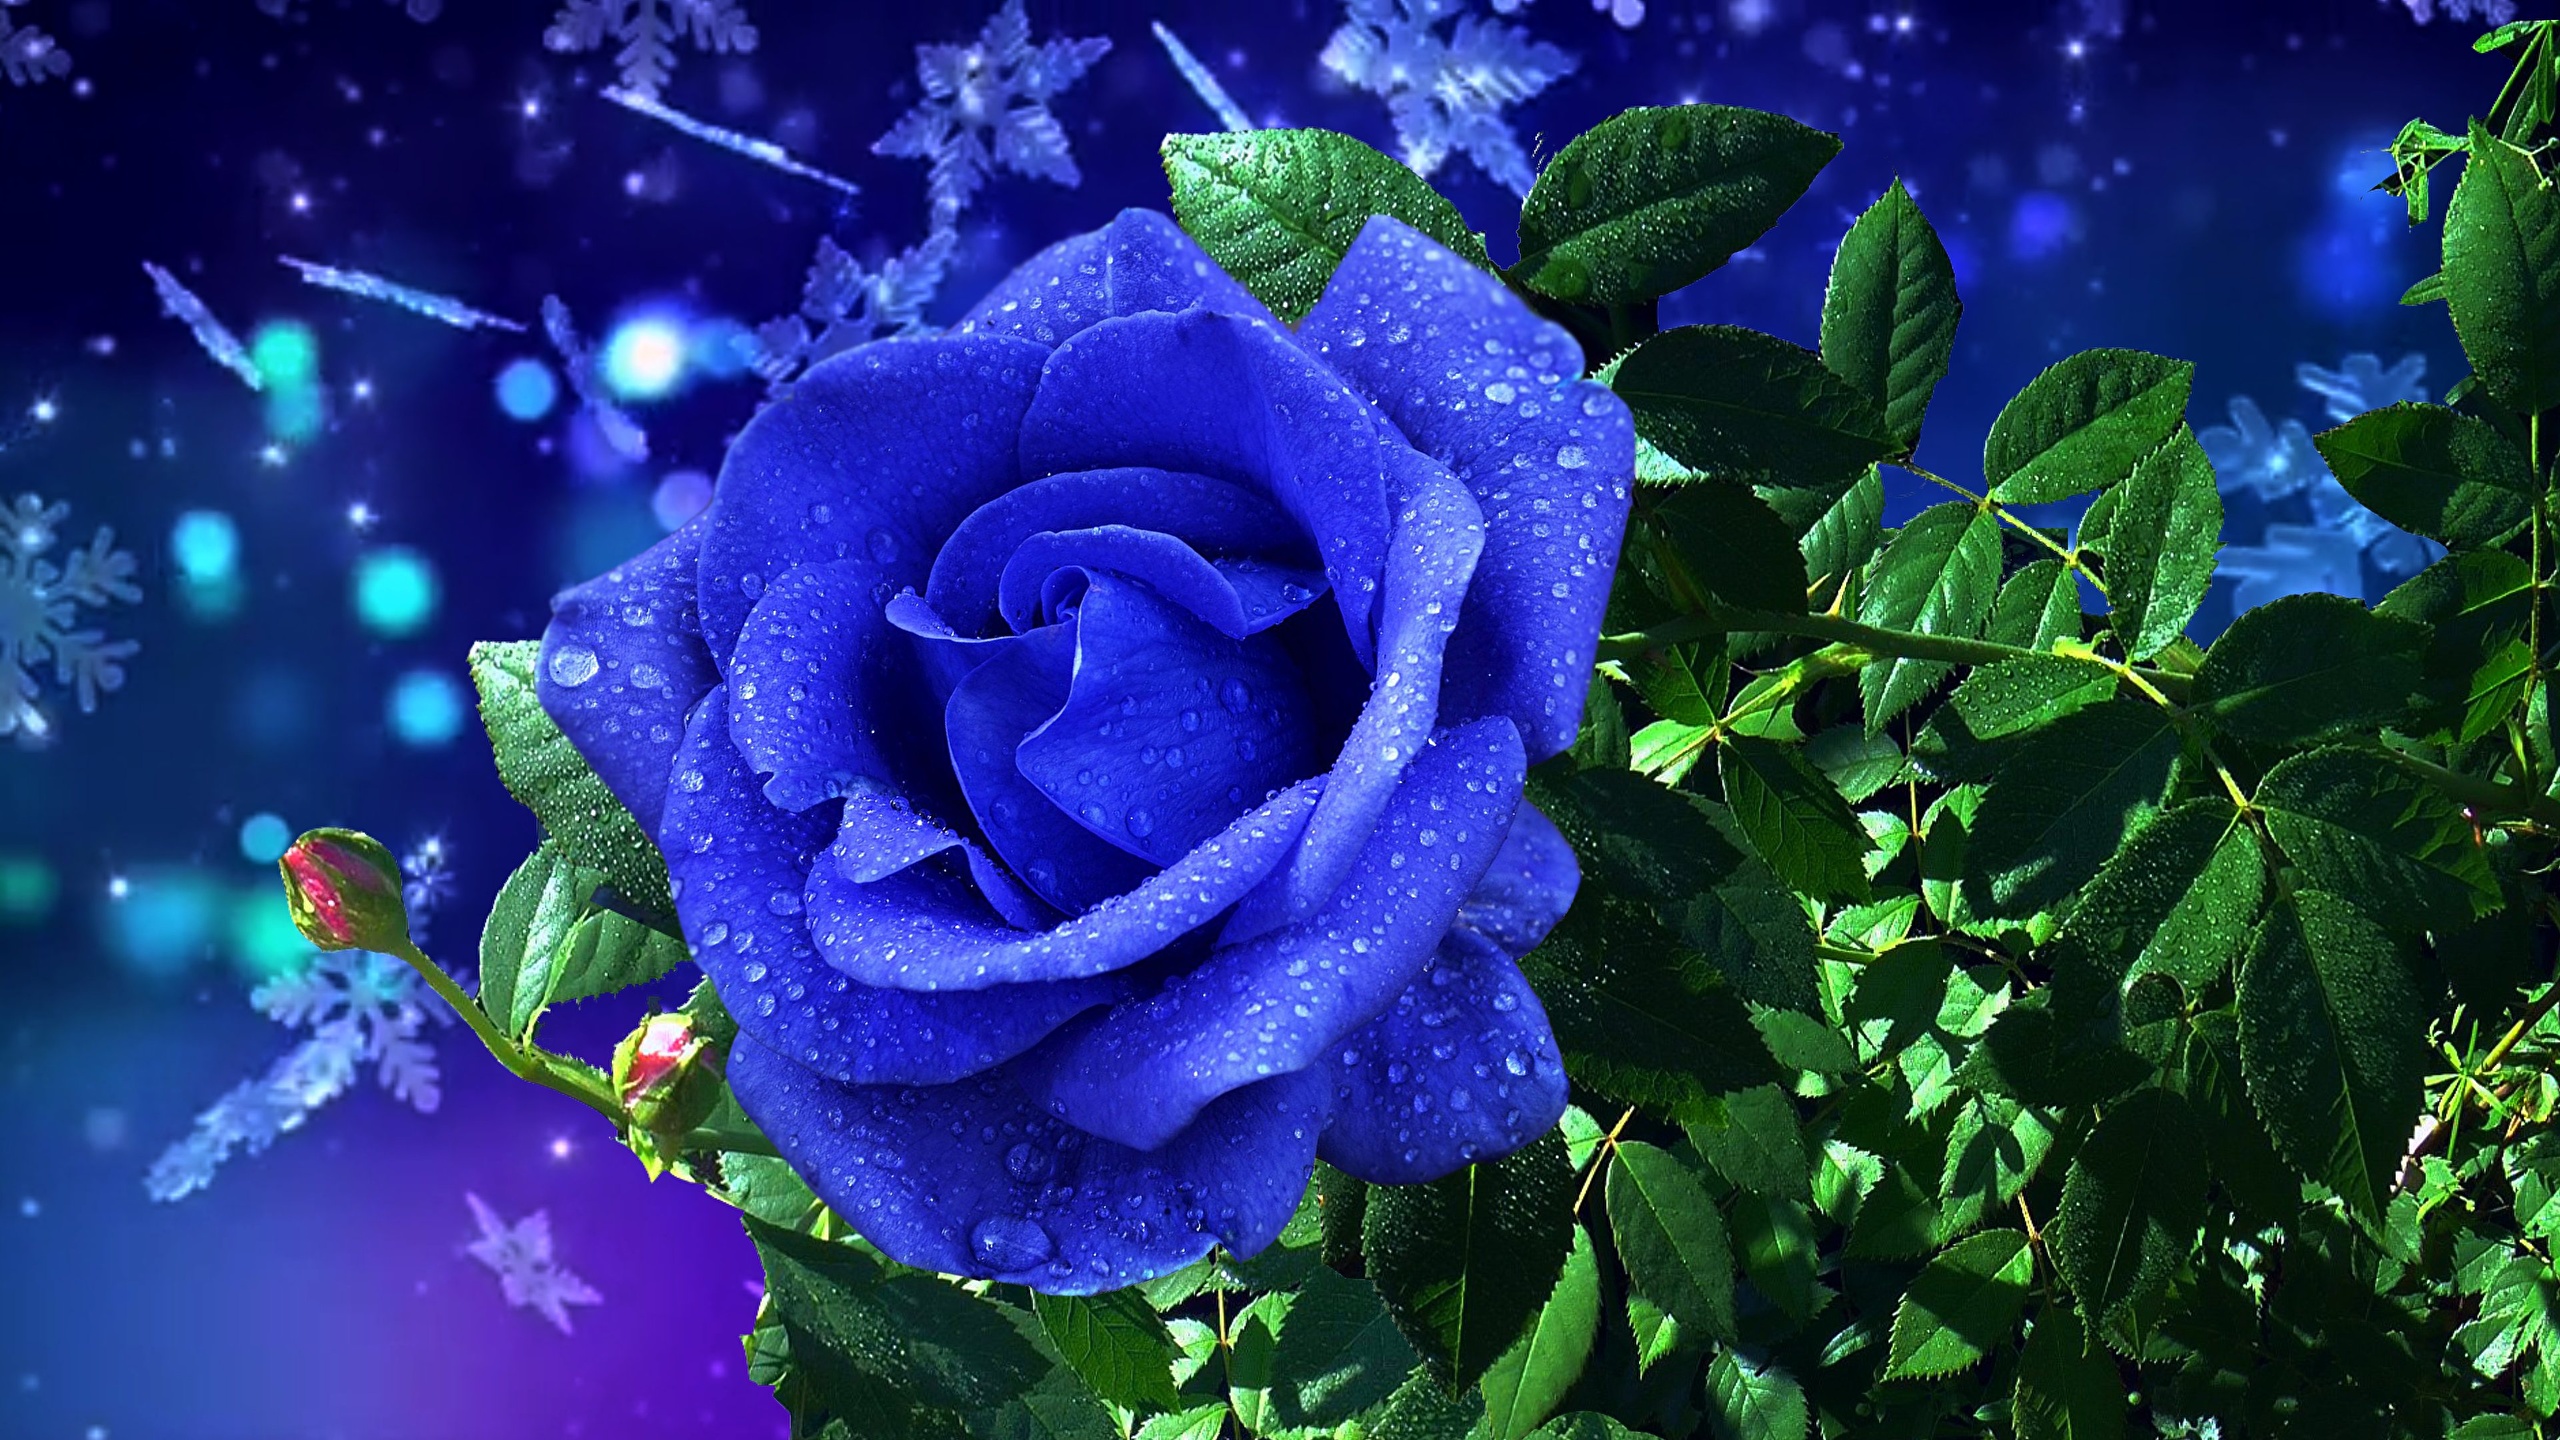 Wallpaper Blue Roses Drops Flowers 2560x1440